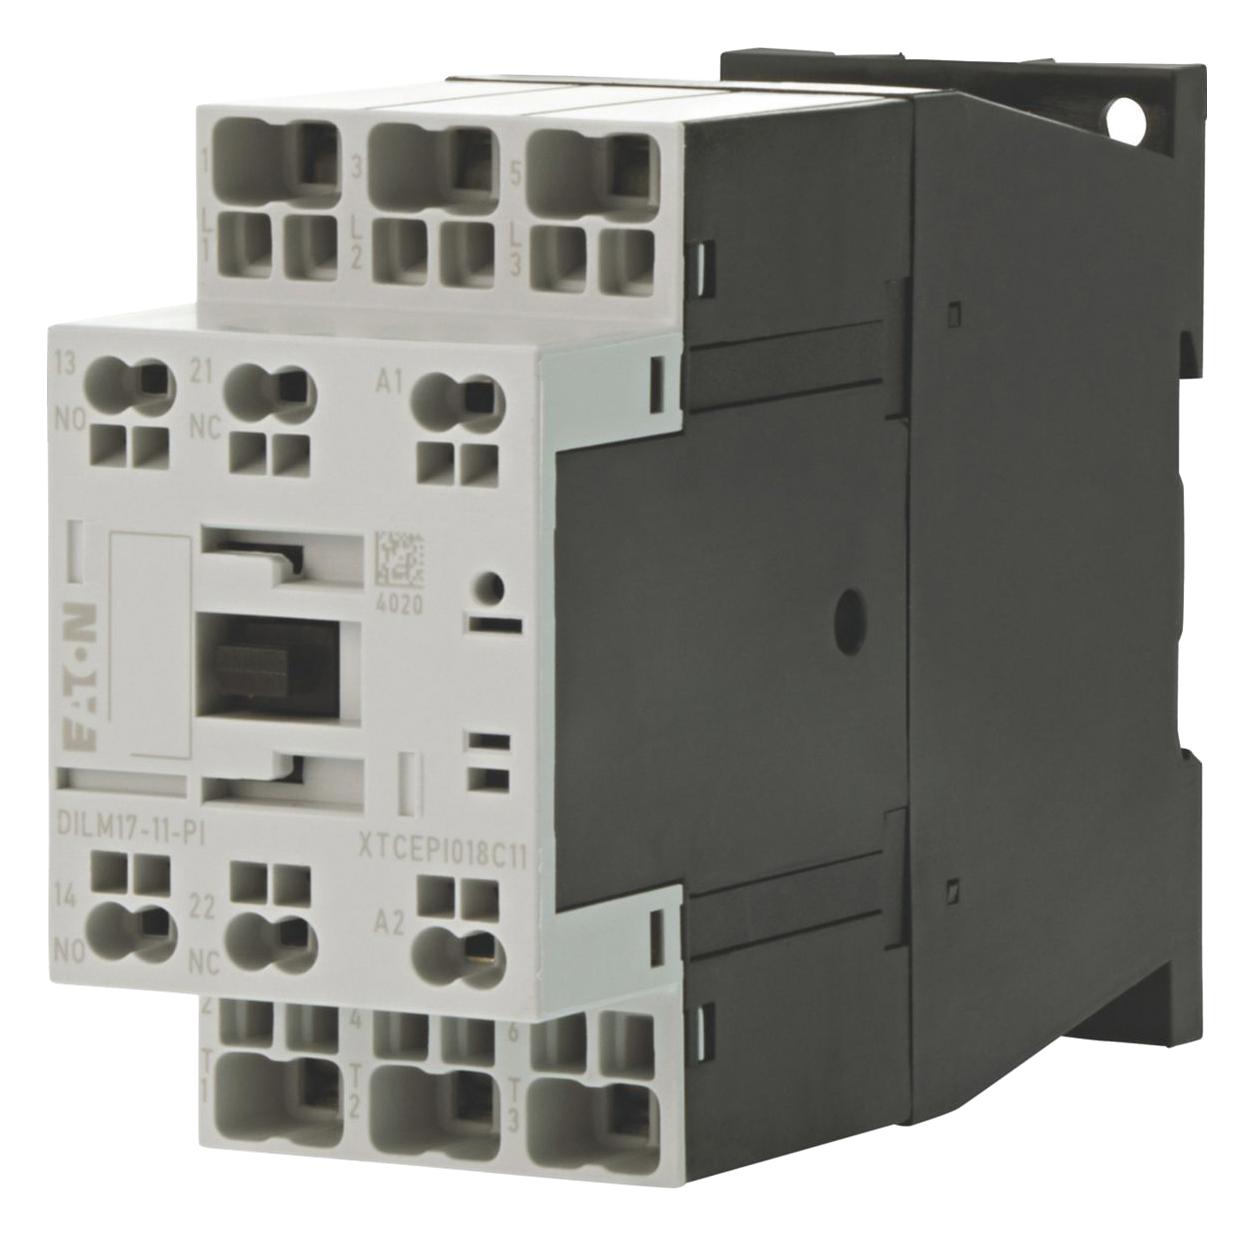 Eaton Moeller Dilm17-11(230V50/60Hz)-Pi Contactor, 3Pst-No, 230Vac, Din/panel